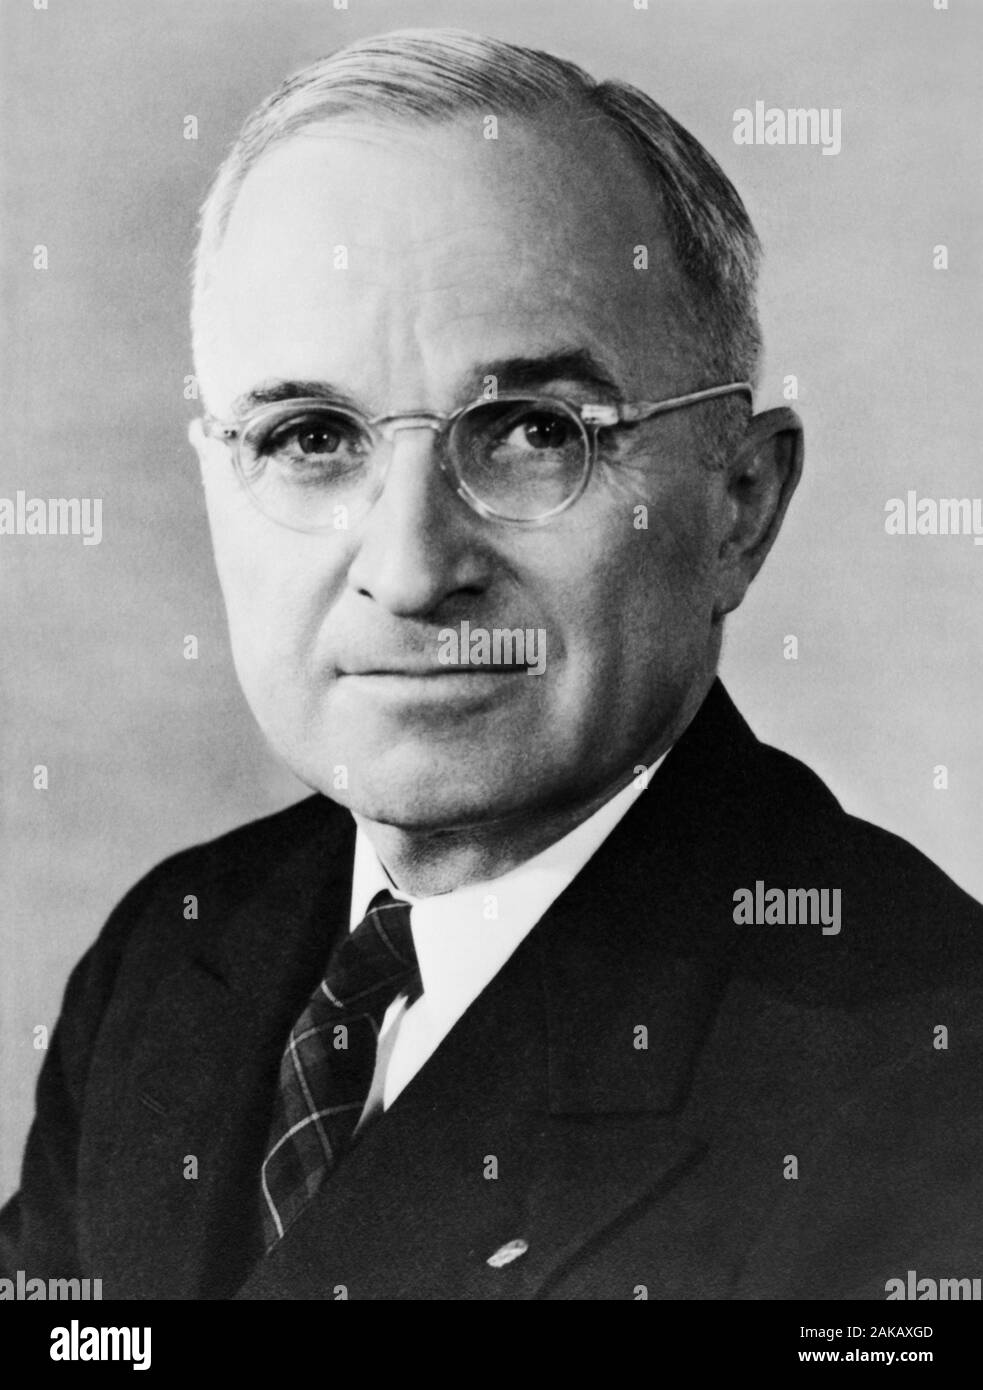 Jahrgang Porträt Foto von Harry S Truman (1884-1972) - Der 33. US-Präsident (1945 - 1953). Foto ca. 1945. Stockfoto